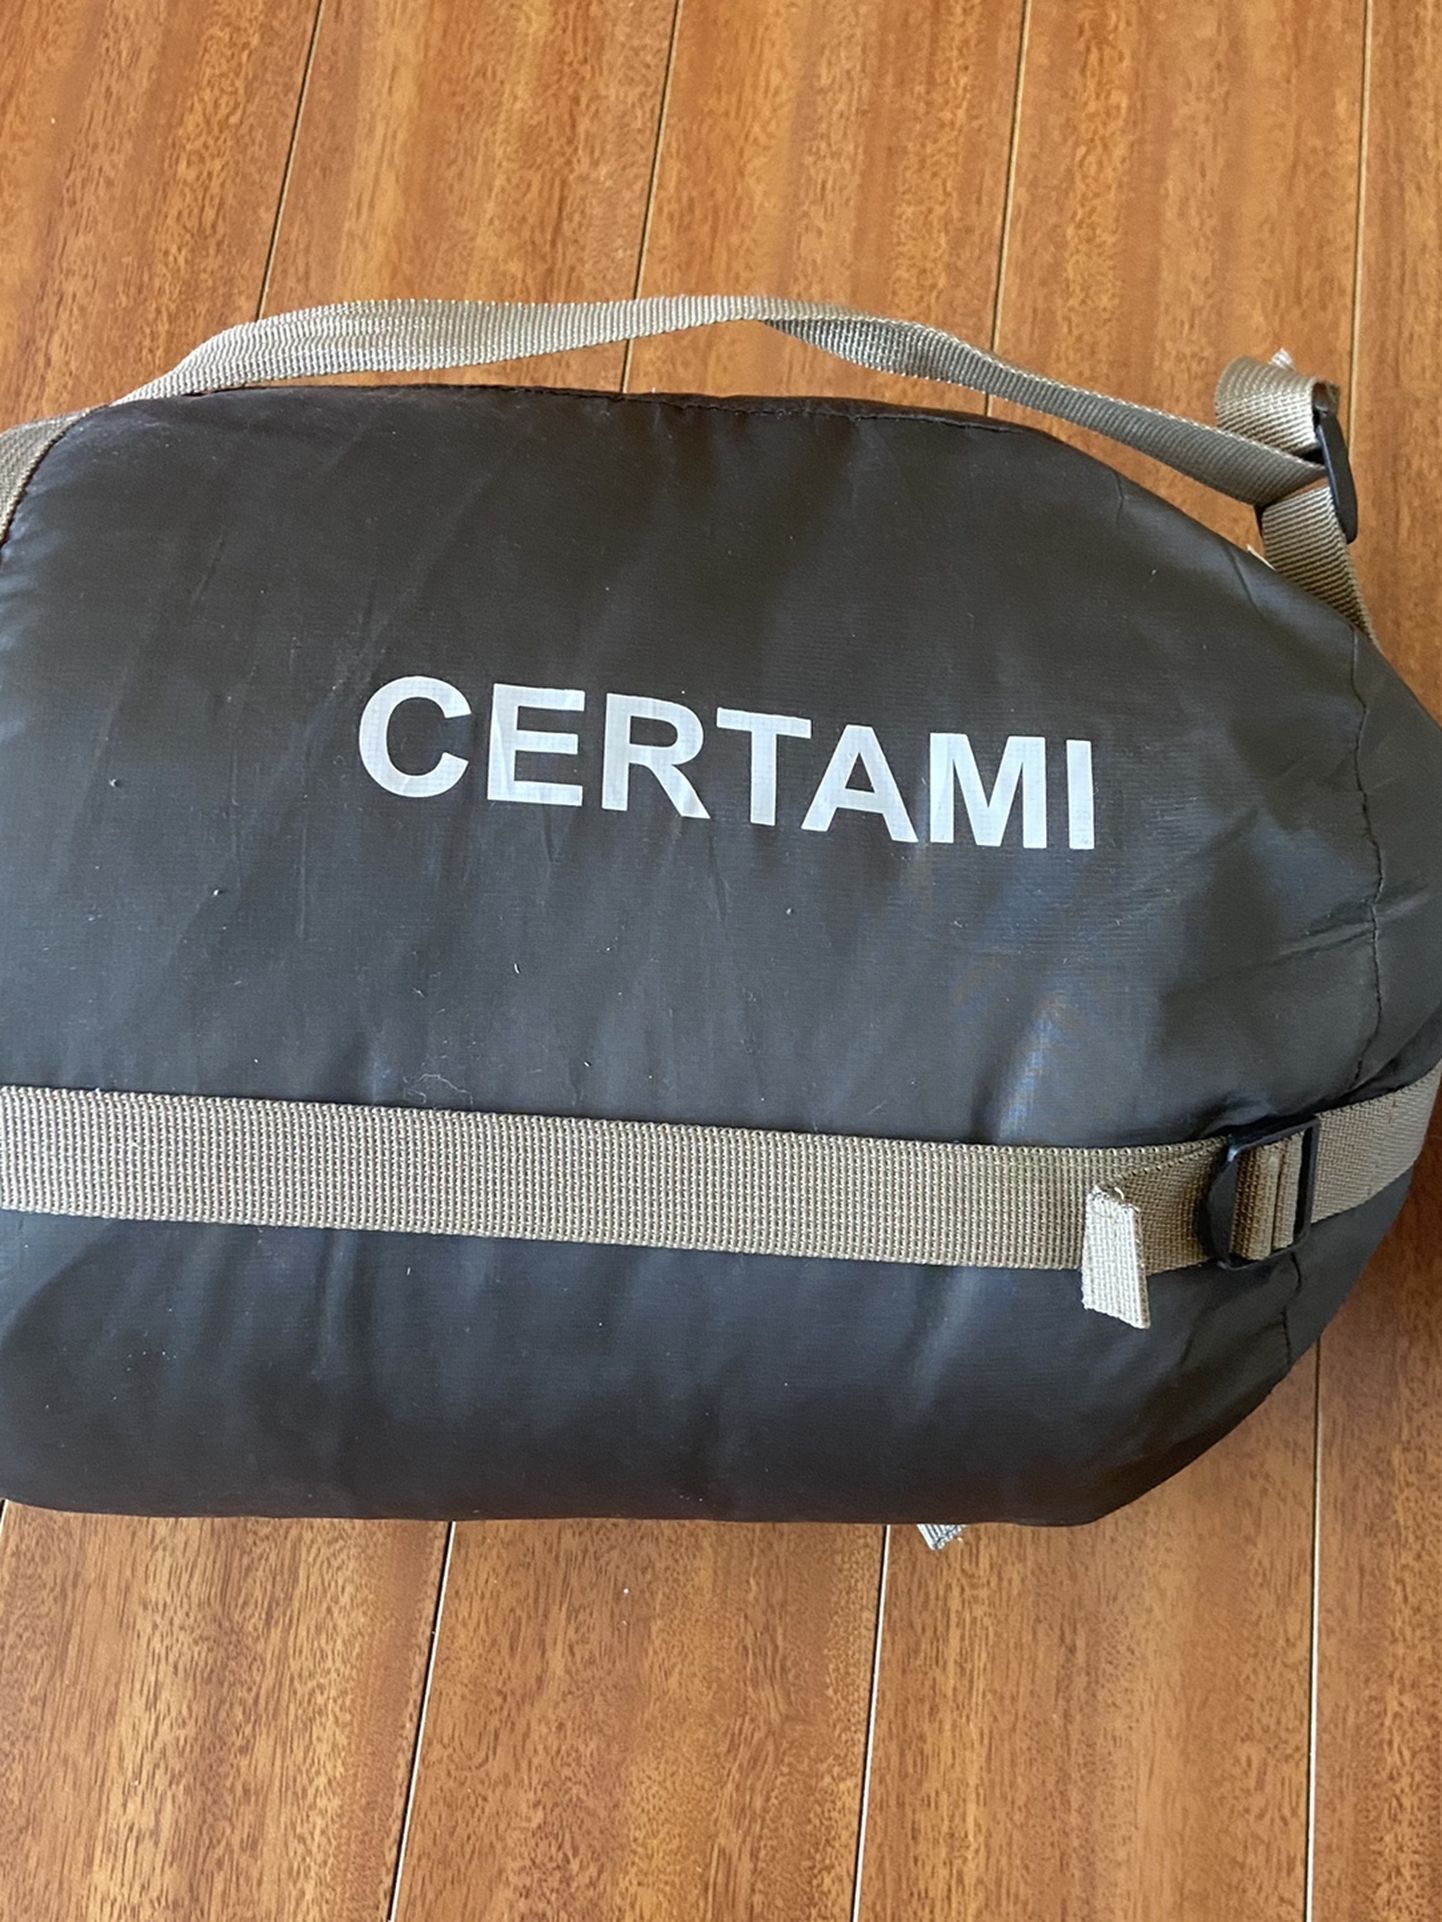 Certami Sleeping Bag (with bonus camping pad!)